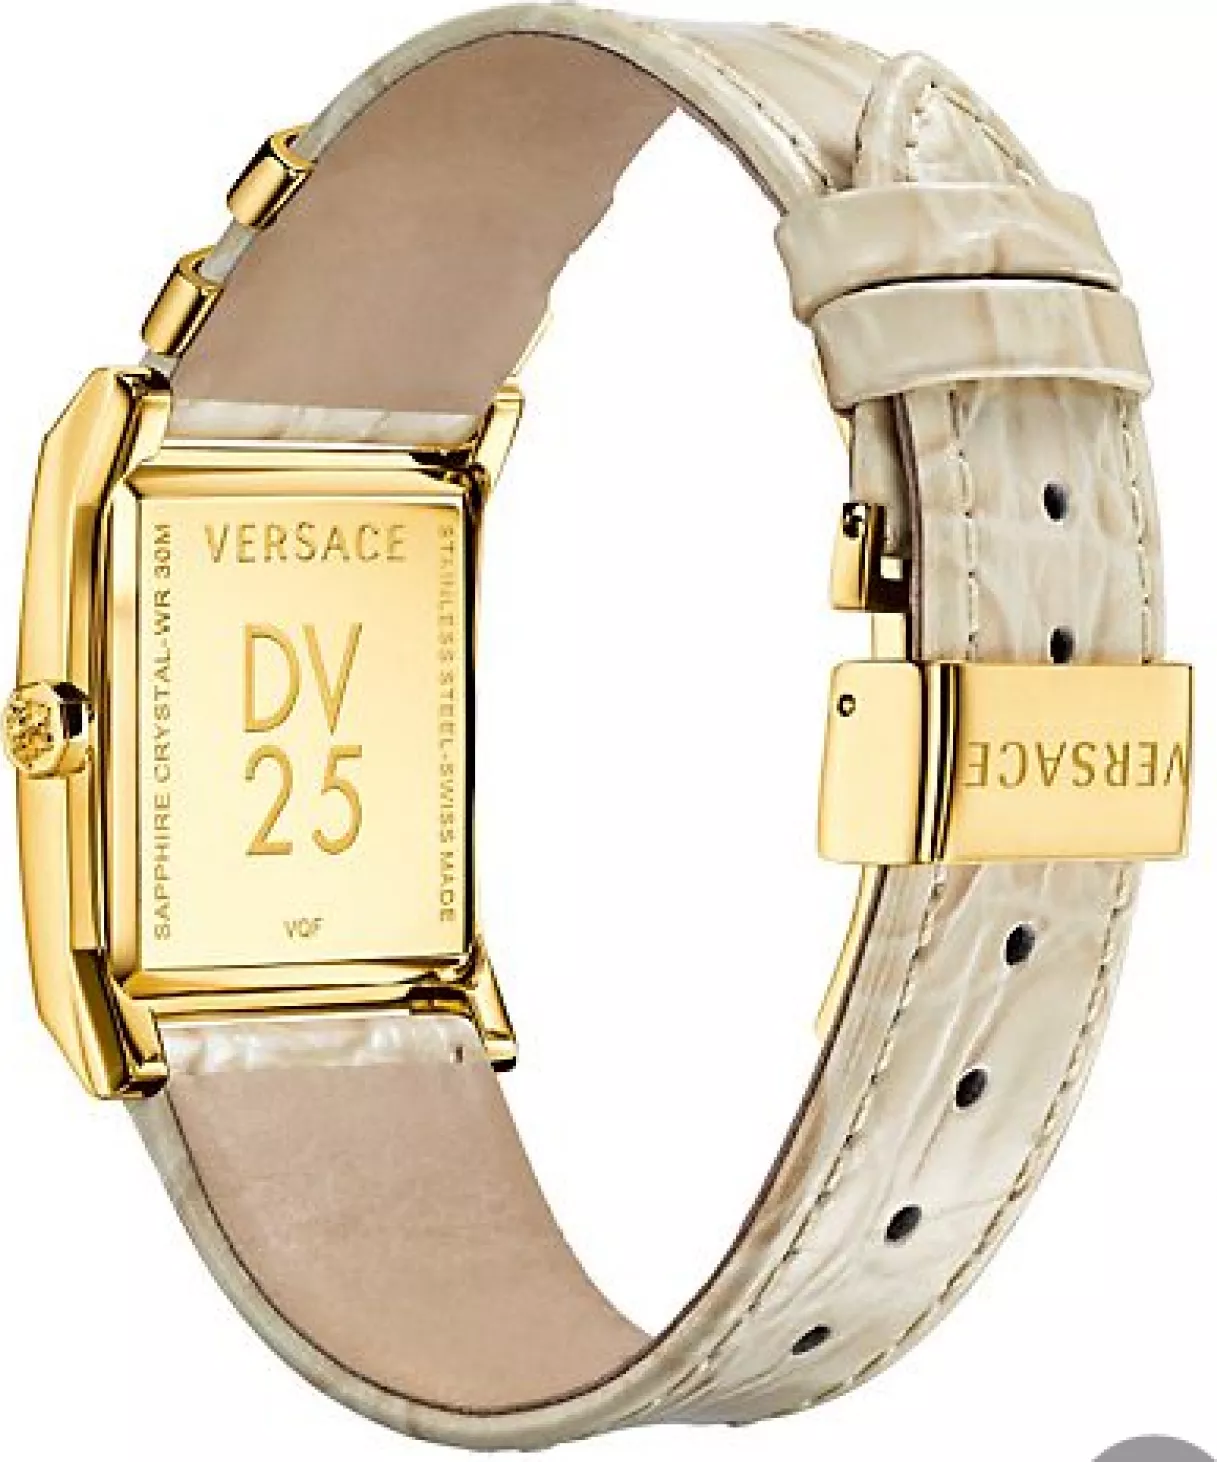 VERSACE DV-25 Ladies Leather Watch 30mm